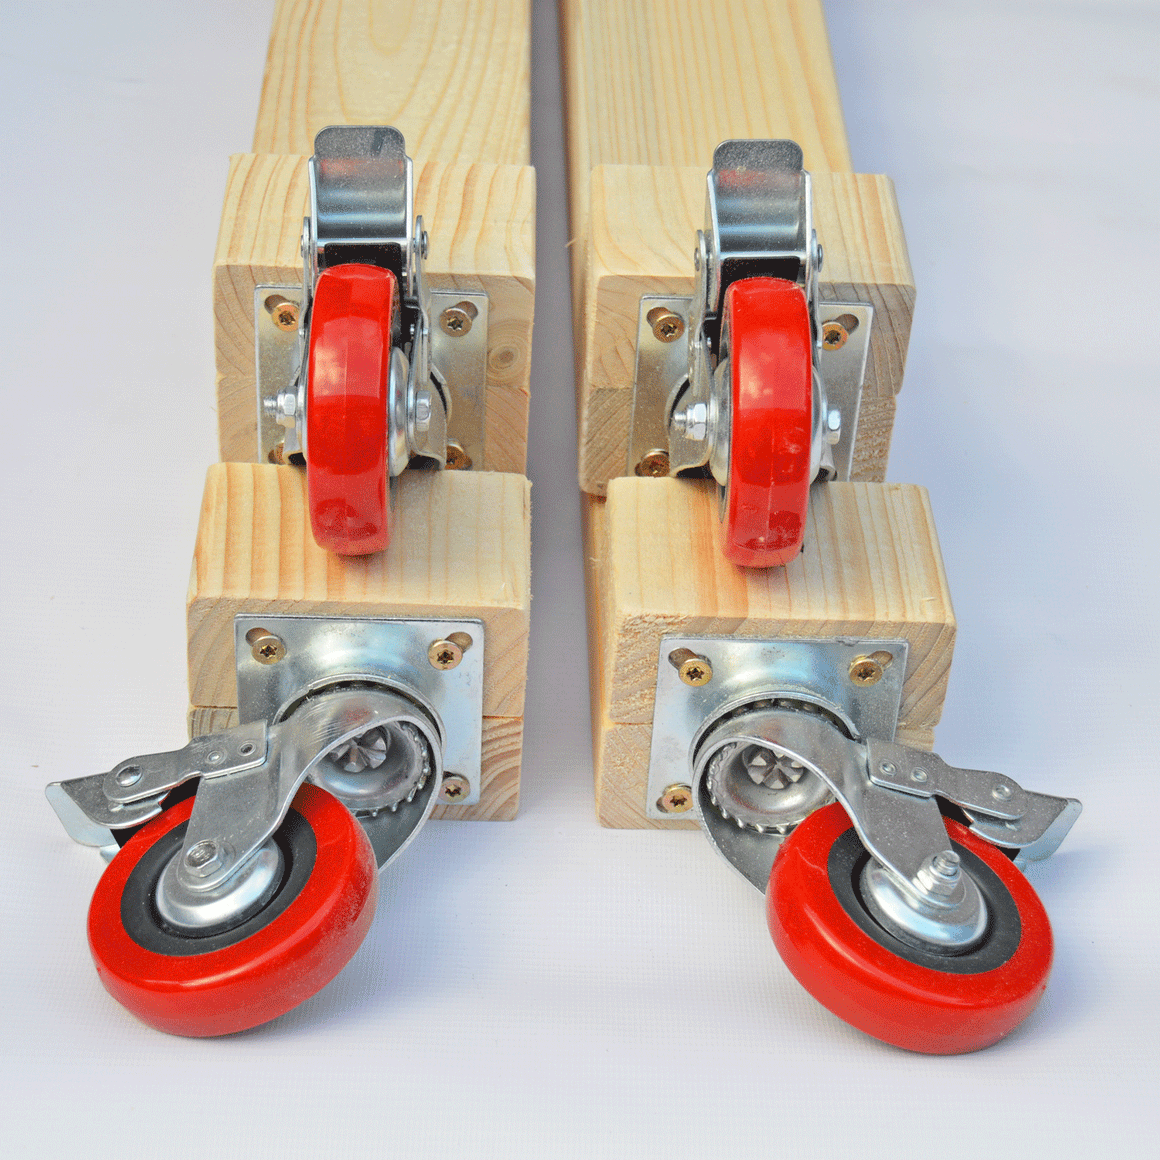 workbench with swivel locking castor wheels